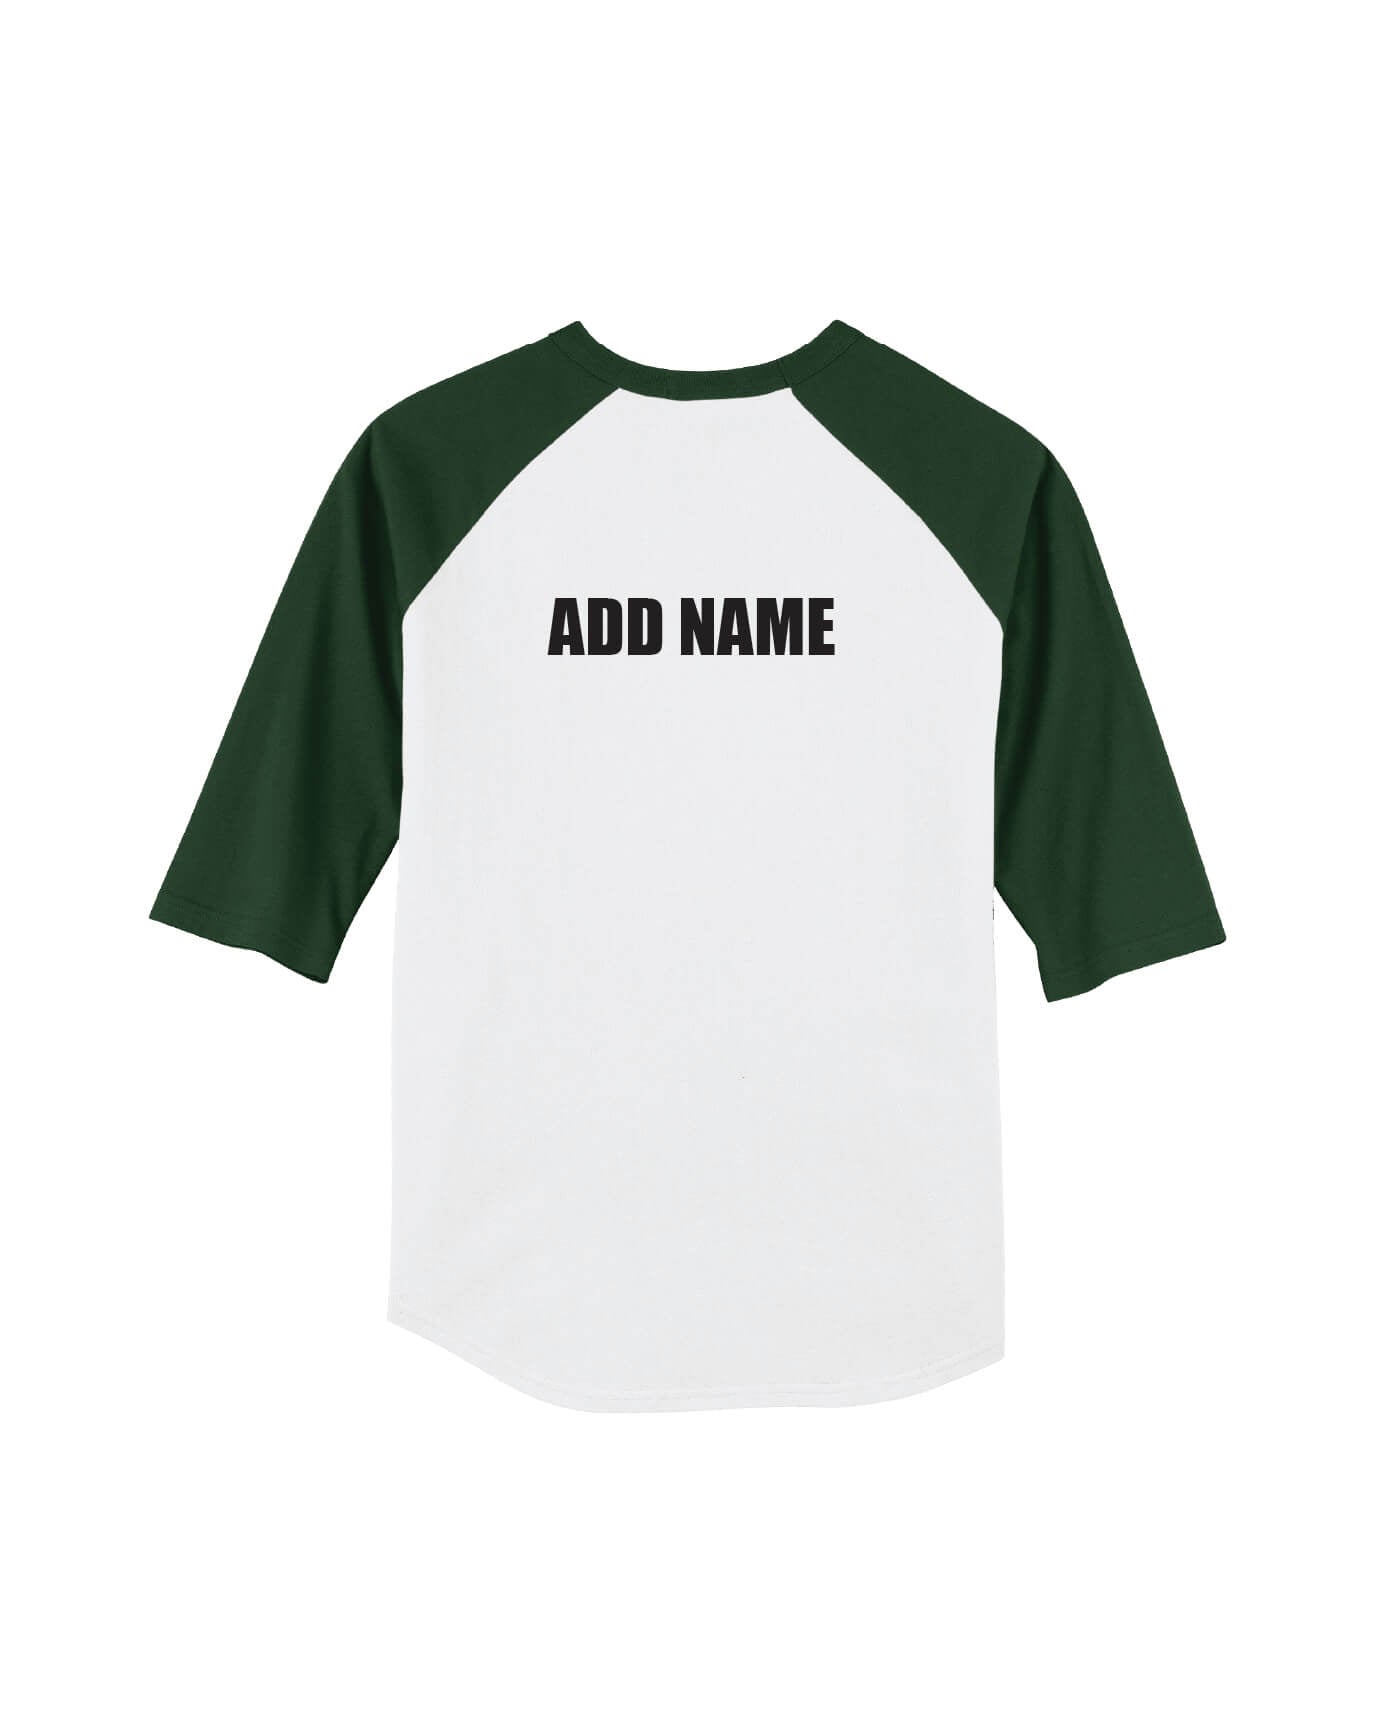 Notre Dame Baseball Sport Tek Colorblock Raglan Jersey - green/white, back